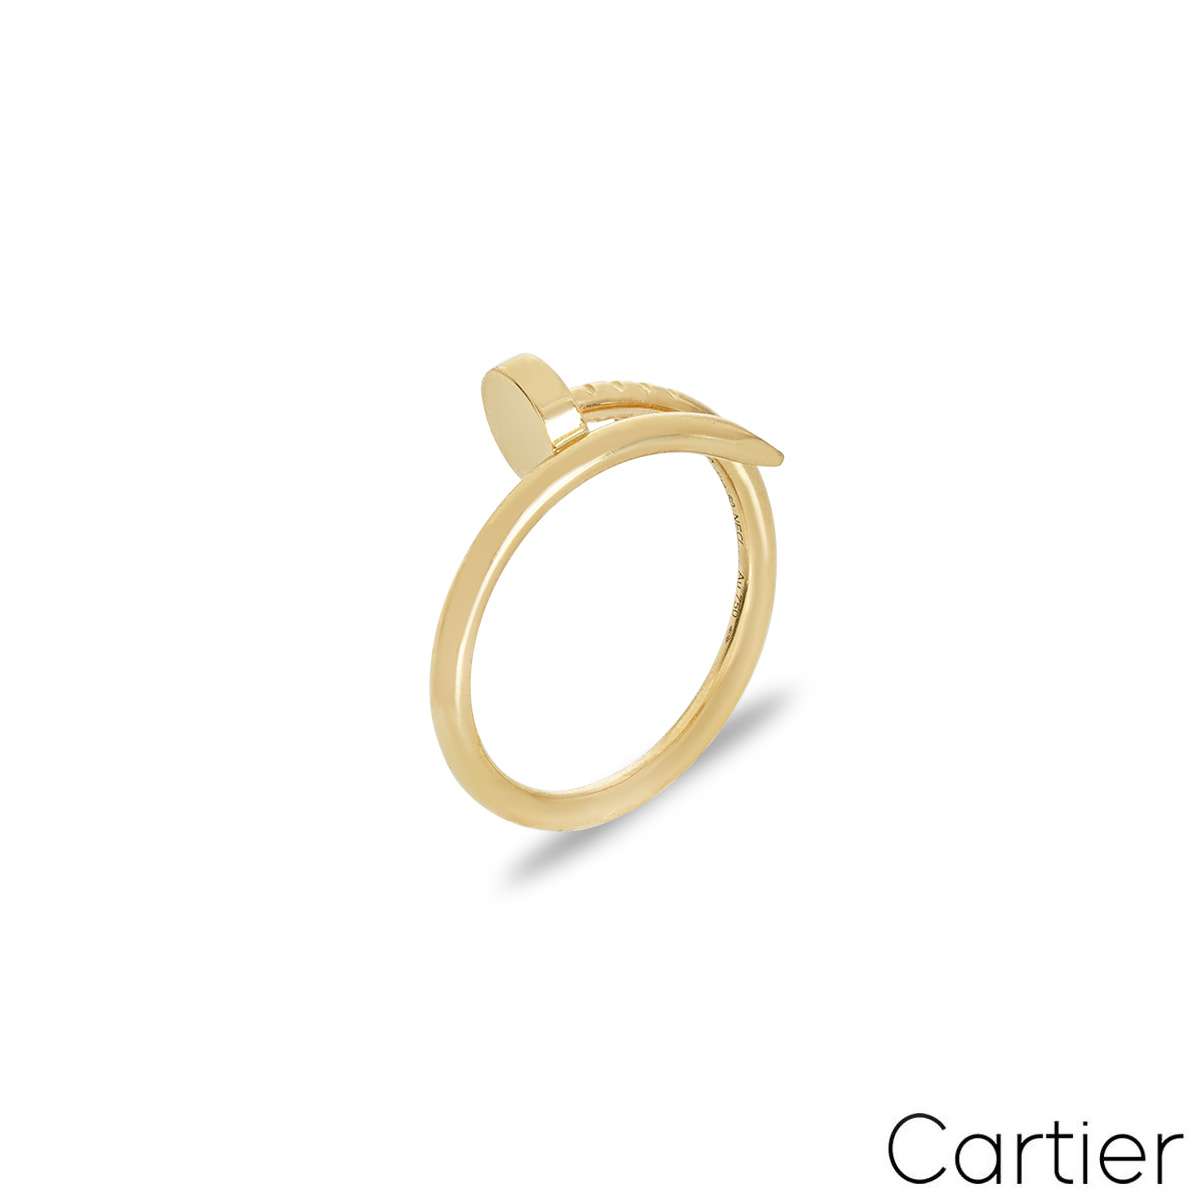 Cartier 18k Yellow Gold SM Juste un Clou Ring Size 50 B4225950